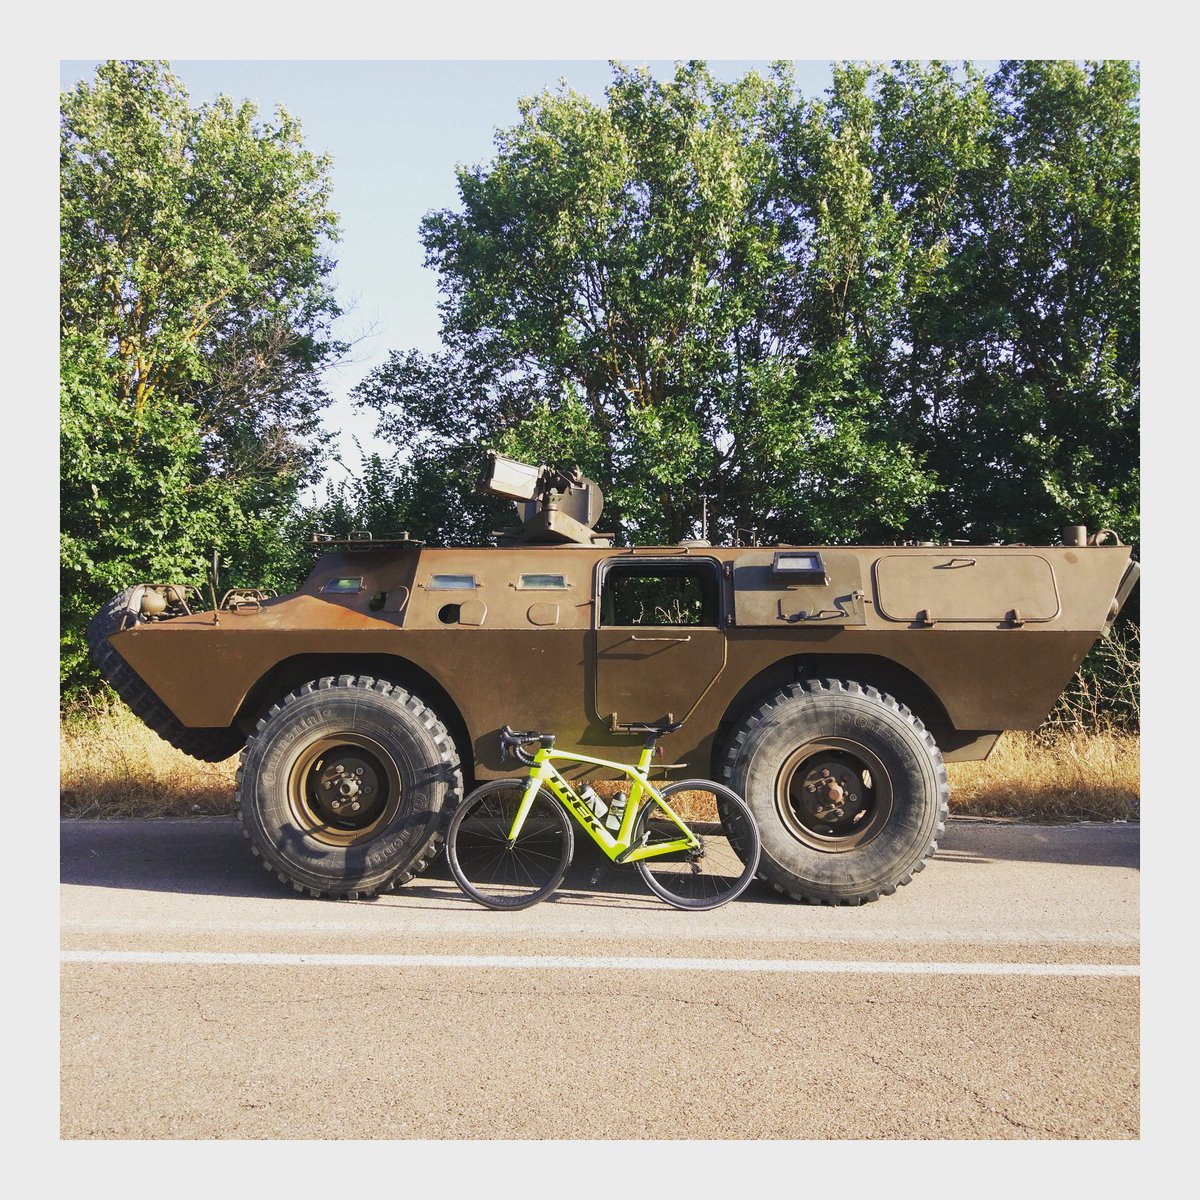 Dos máquinas de matar....
#yellowteam 
#yellowriders
#transpyrambassador 
#fun
#militar
#tanquedeguerra 
#picofttheday 
#instabike 
#roadbike 
#madone9 
#instacycling 
#cyclinglife 
#pornbike